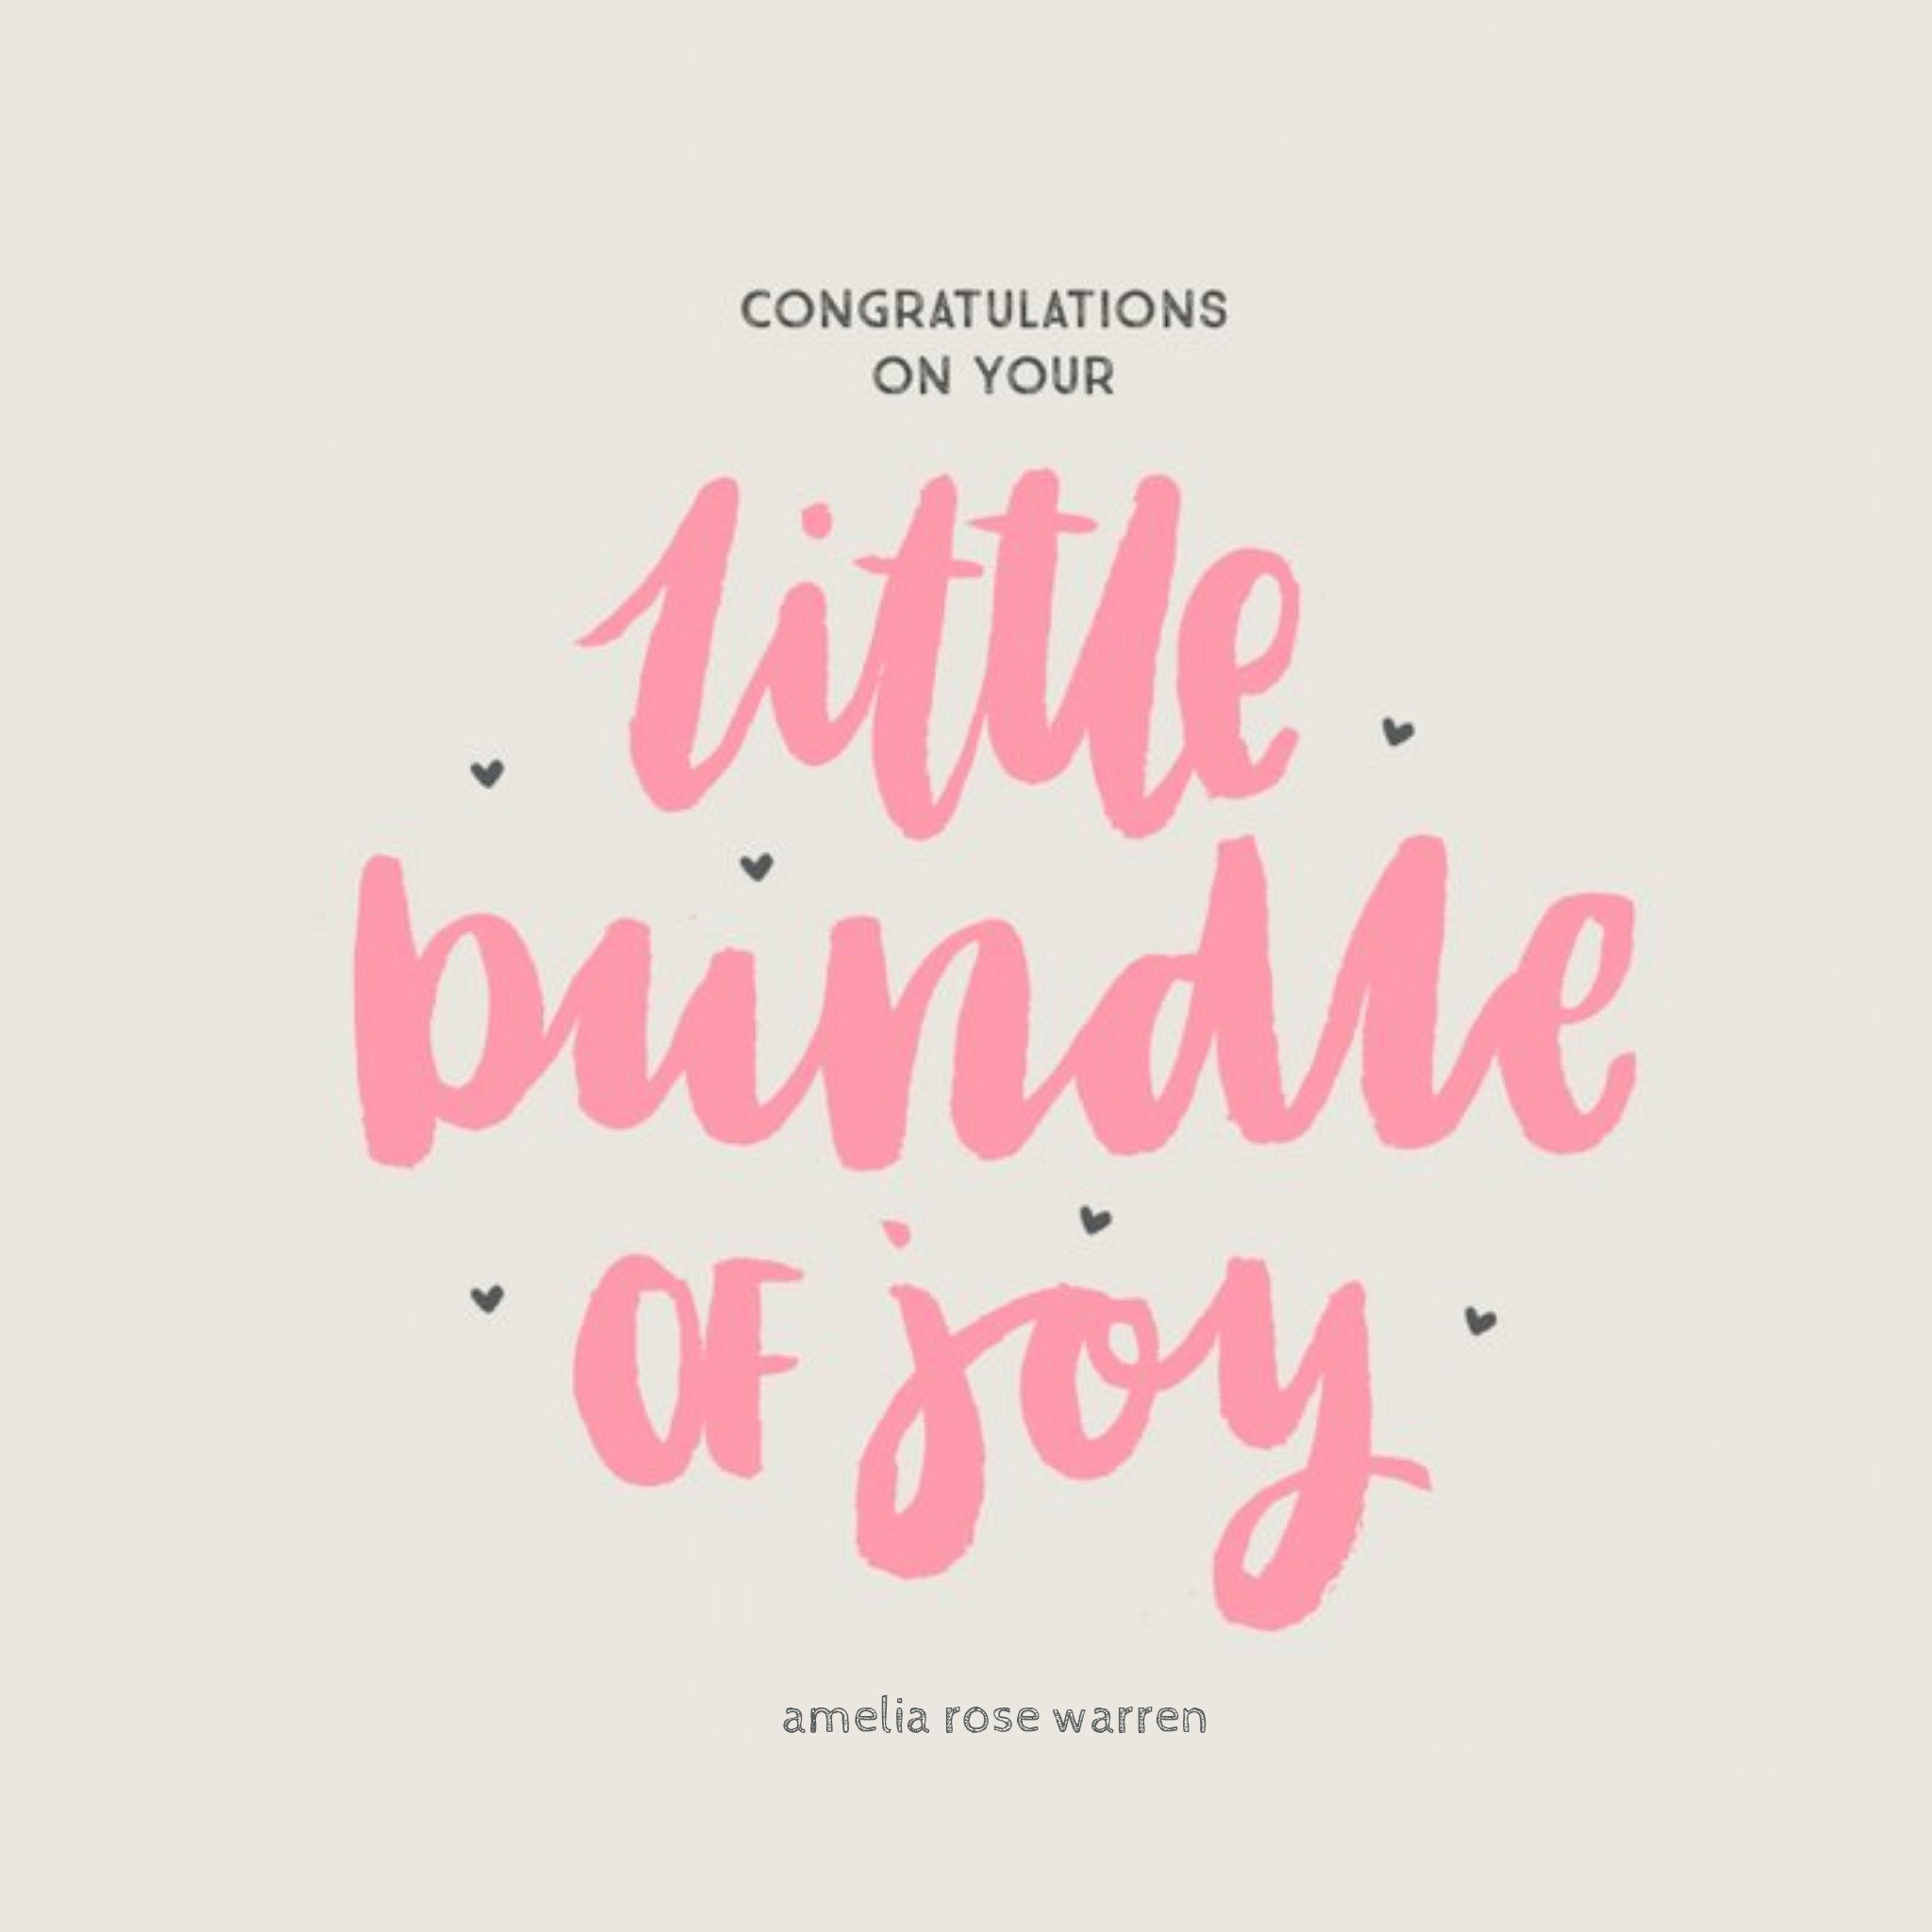 Moonpig Personalised Congrats On You Bundle Of Joy New Baby Card, Large